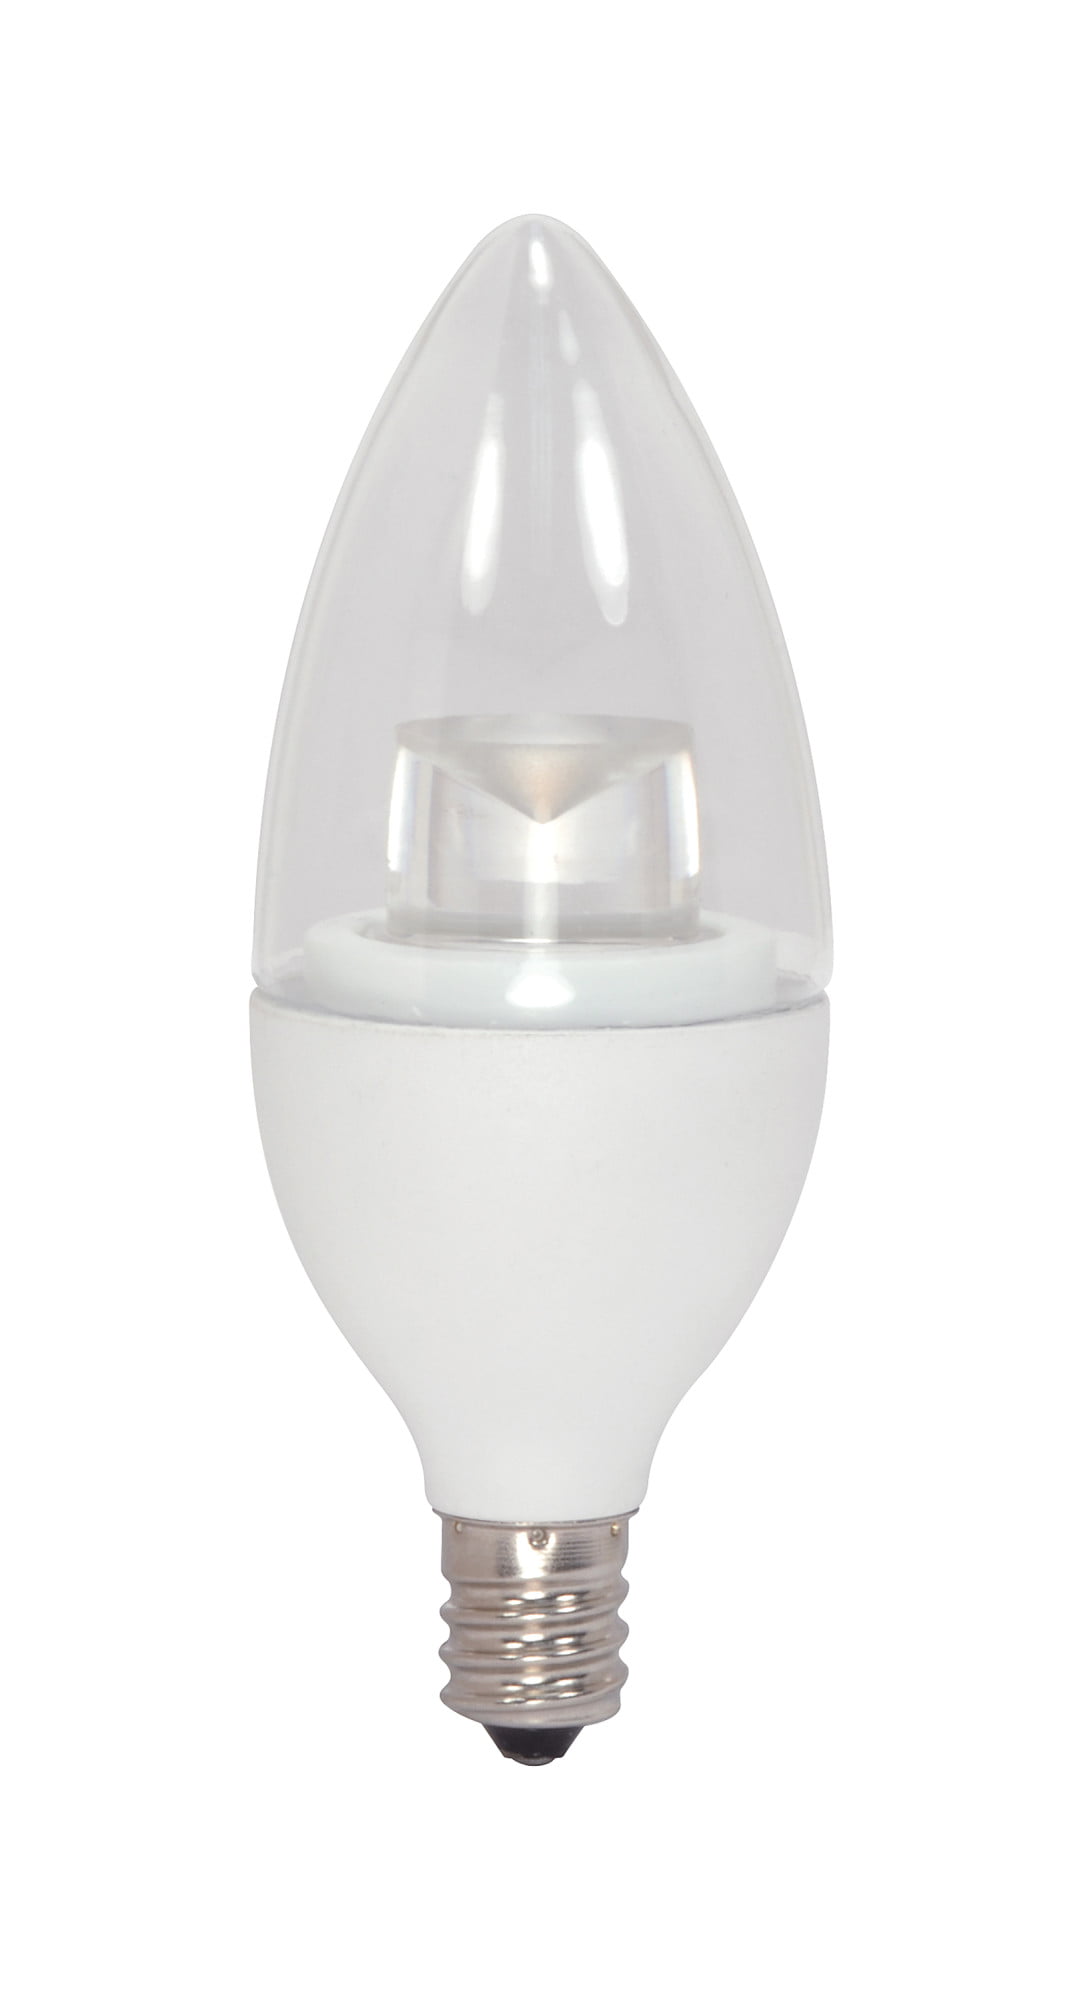 15  Watt  120 volt Candelabra base Satco flame tip clear light bulbs  Box of 25 